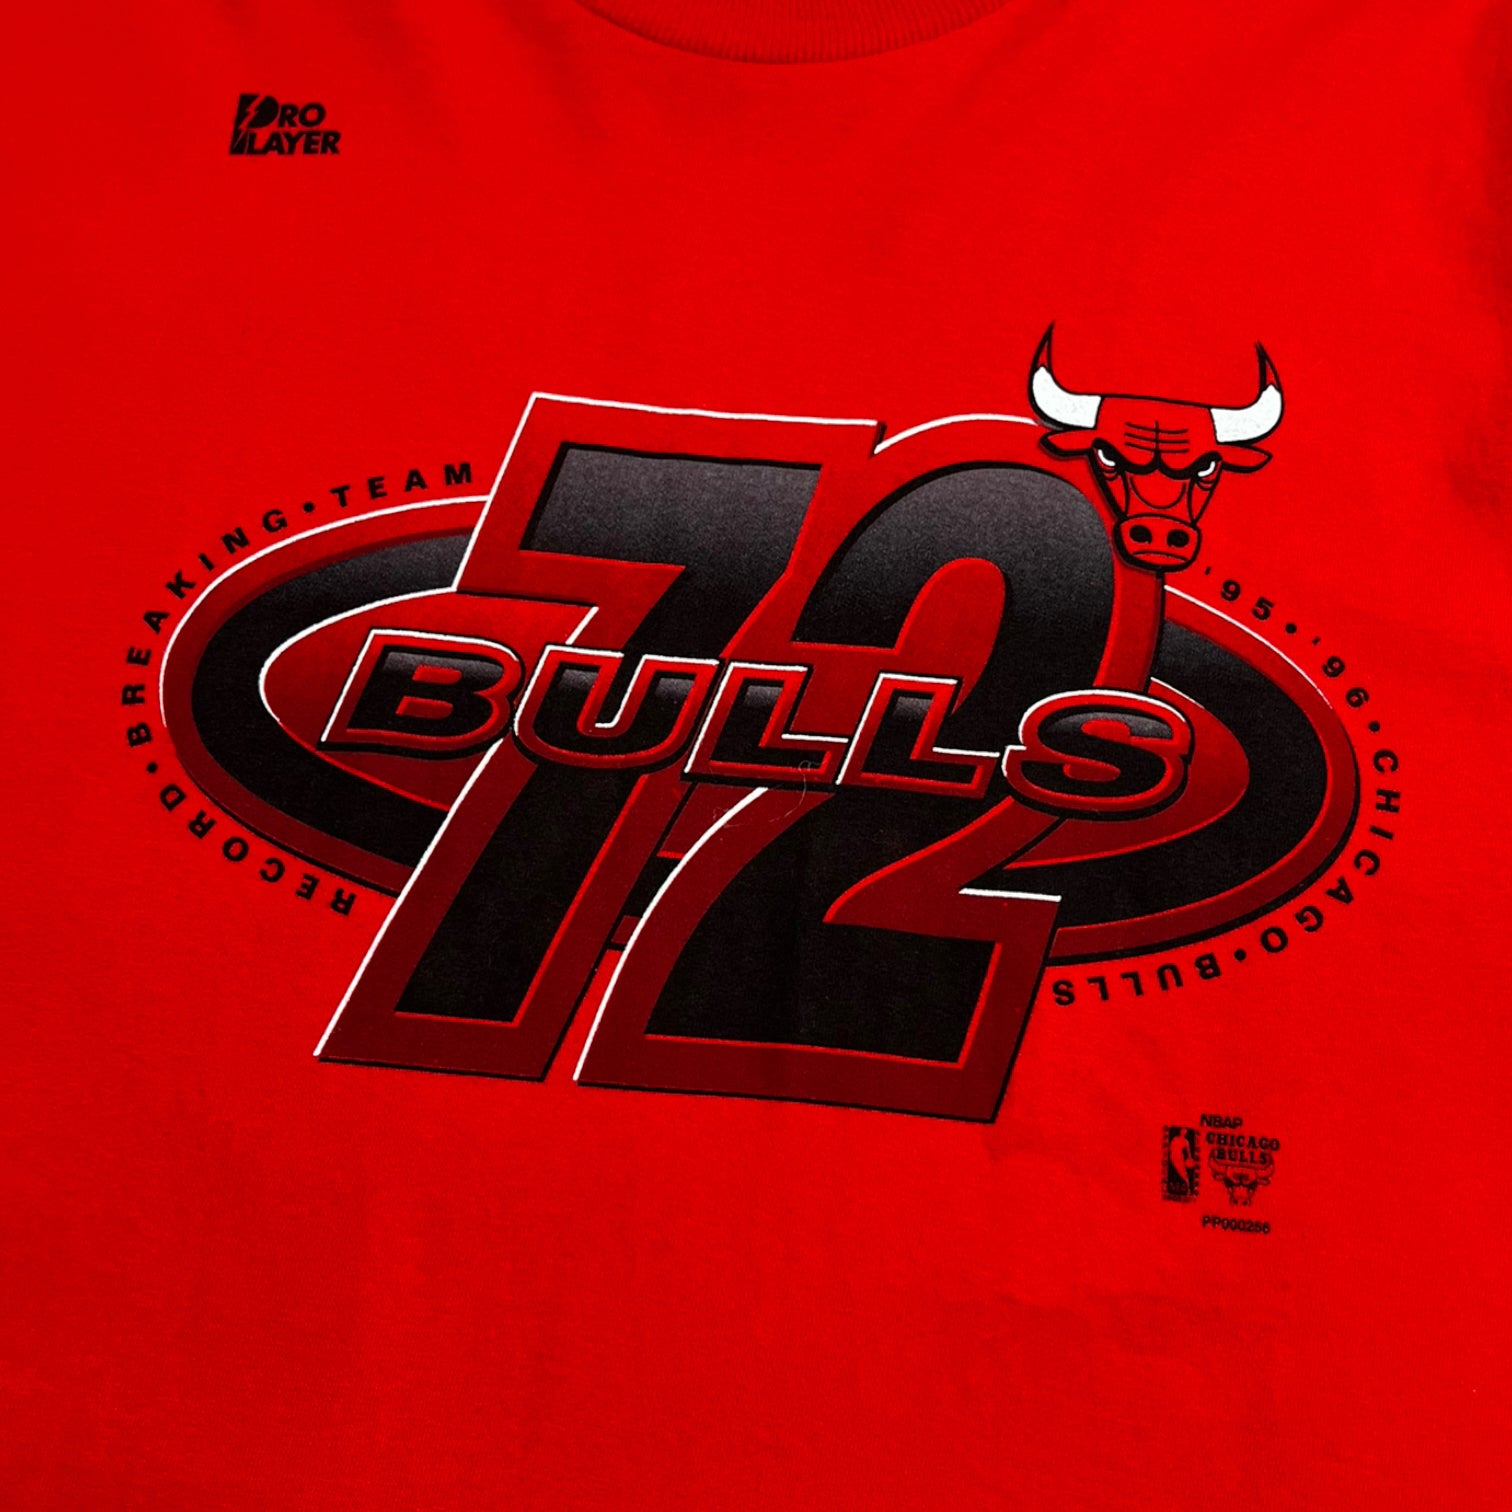 1996 Chicago Bulls “72 Bulls” Tee